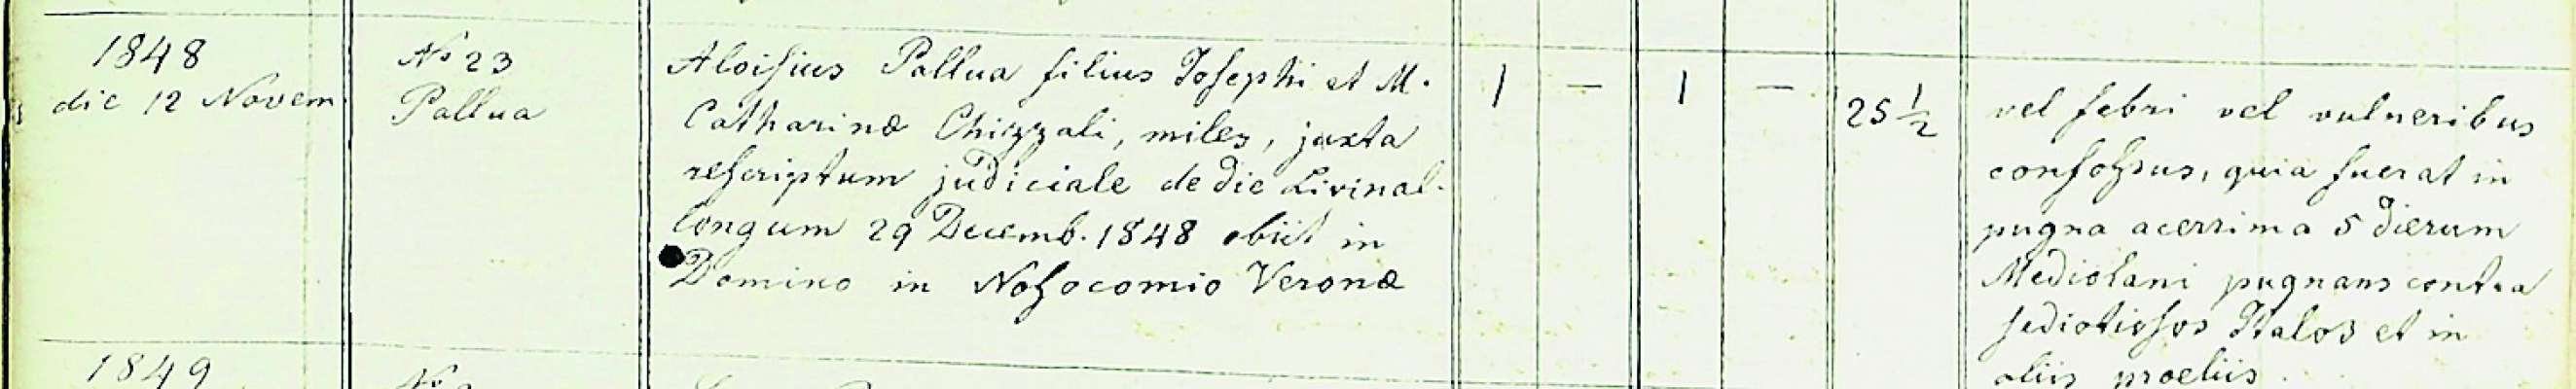 L'anotazion de mort de Aloisius Pallua, soldado da Col mort ntel 1848.
